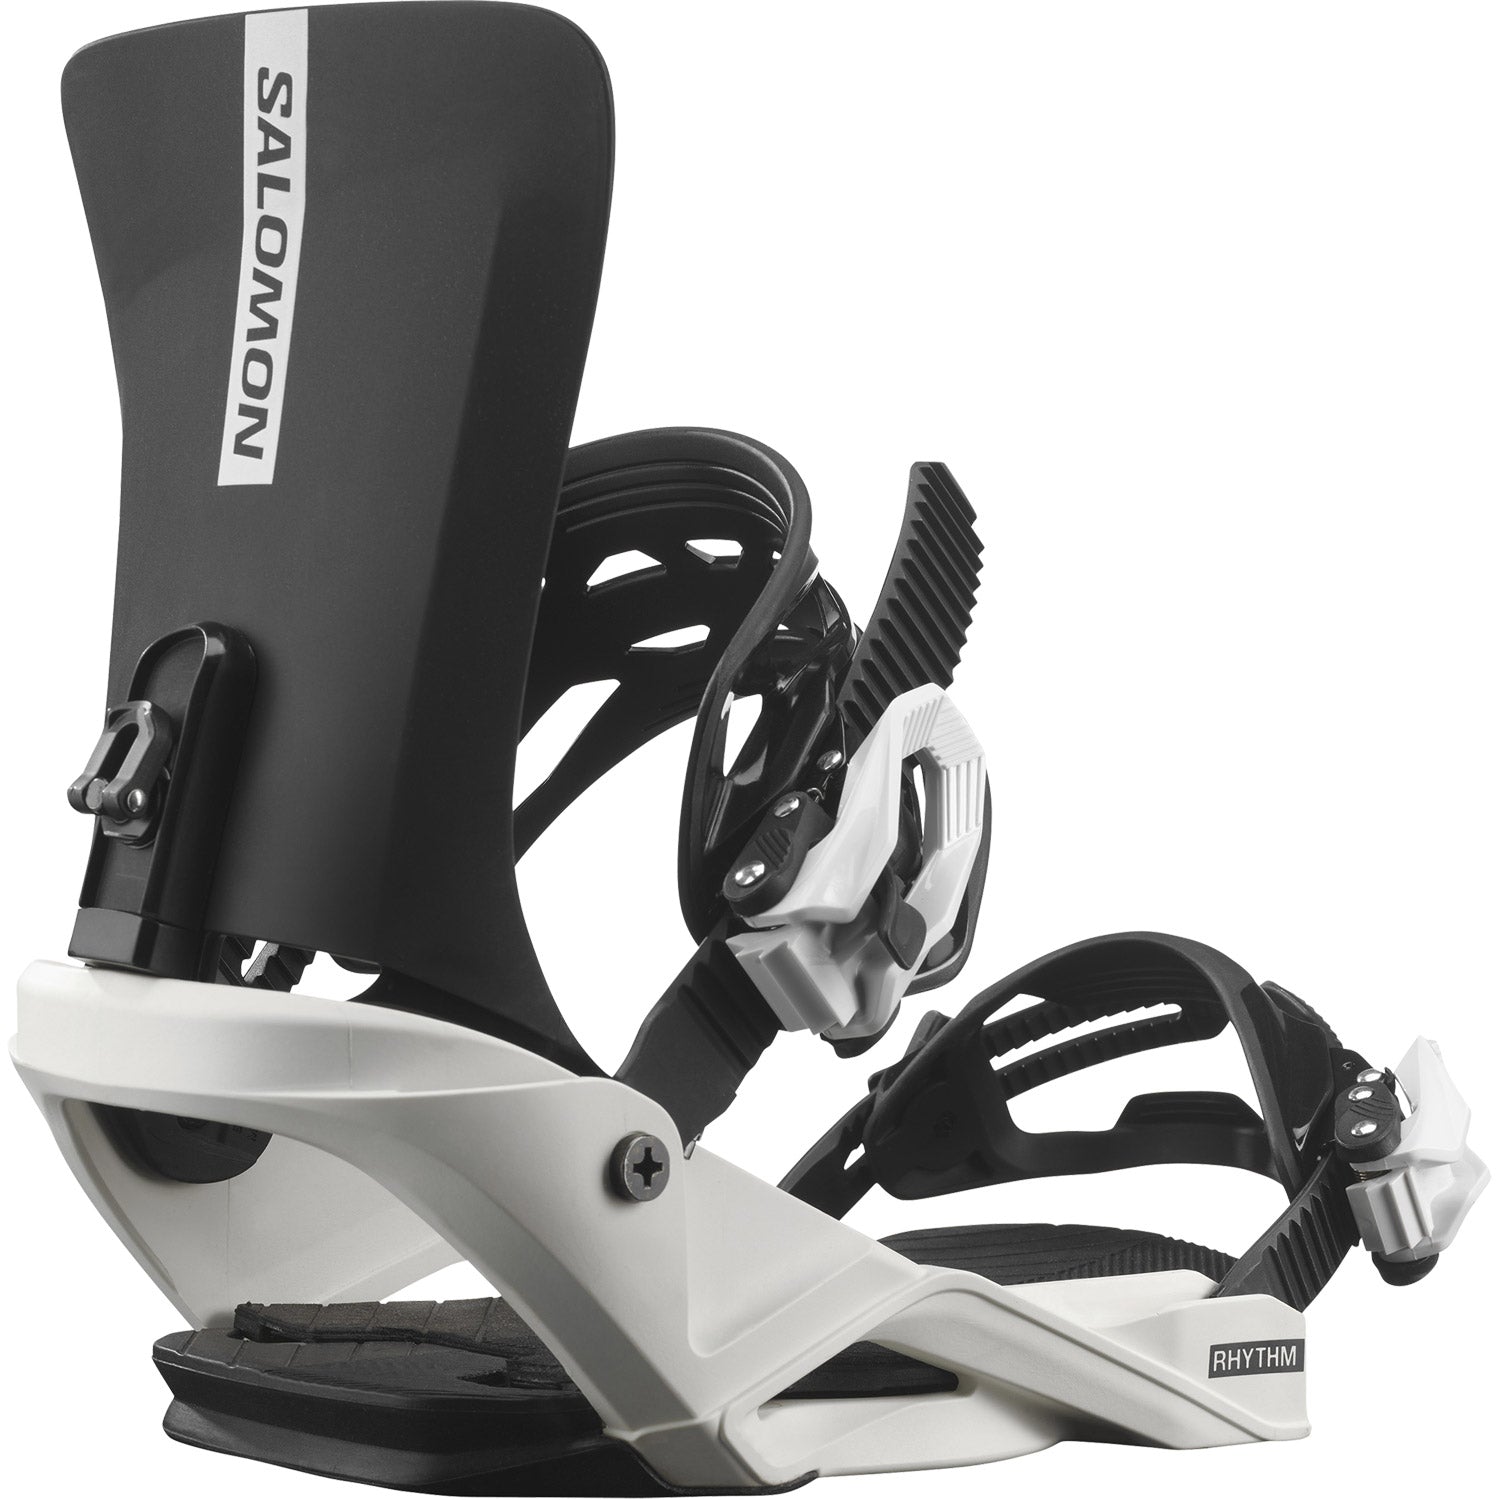 Salomon Rhythm Snowboard Bindings Black White